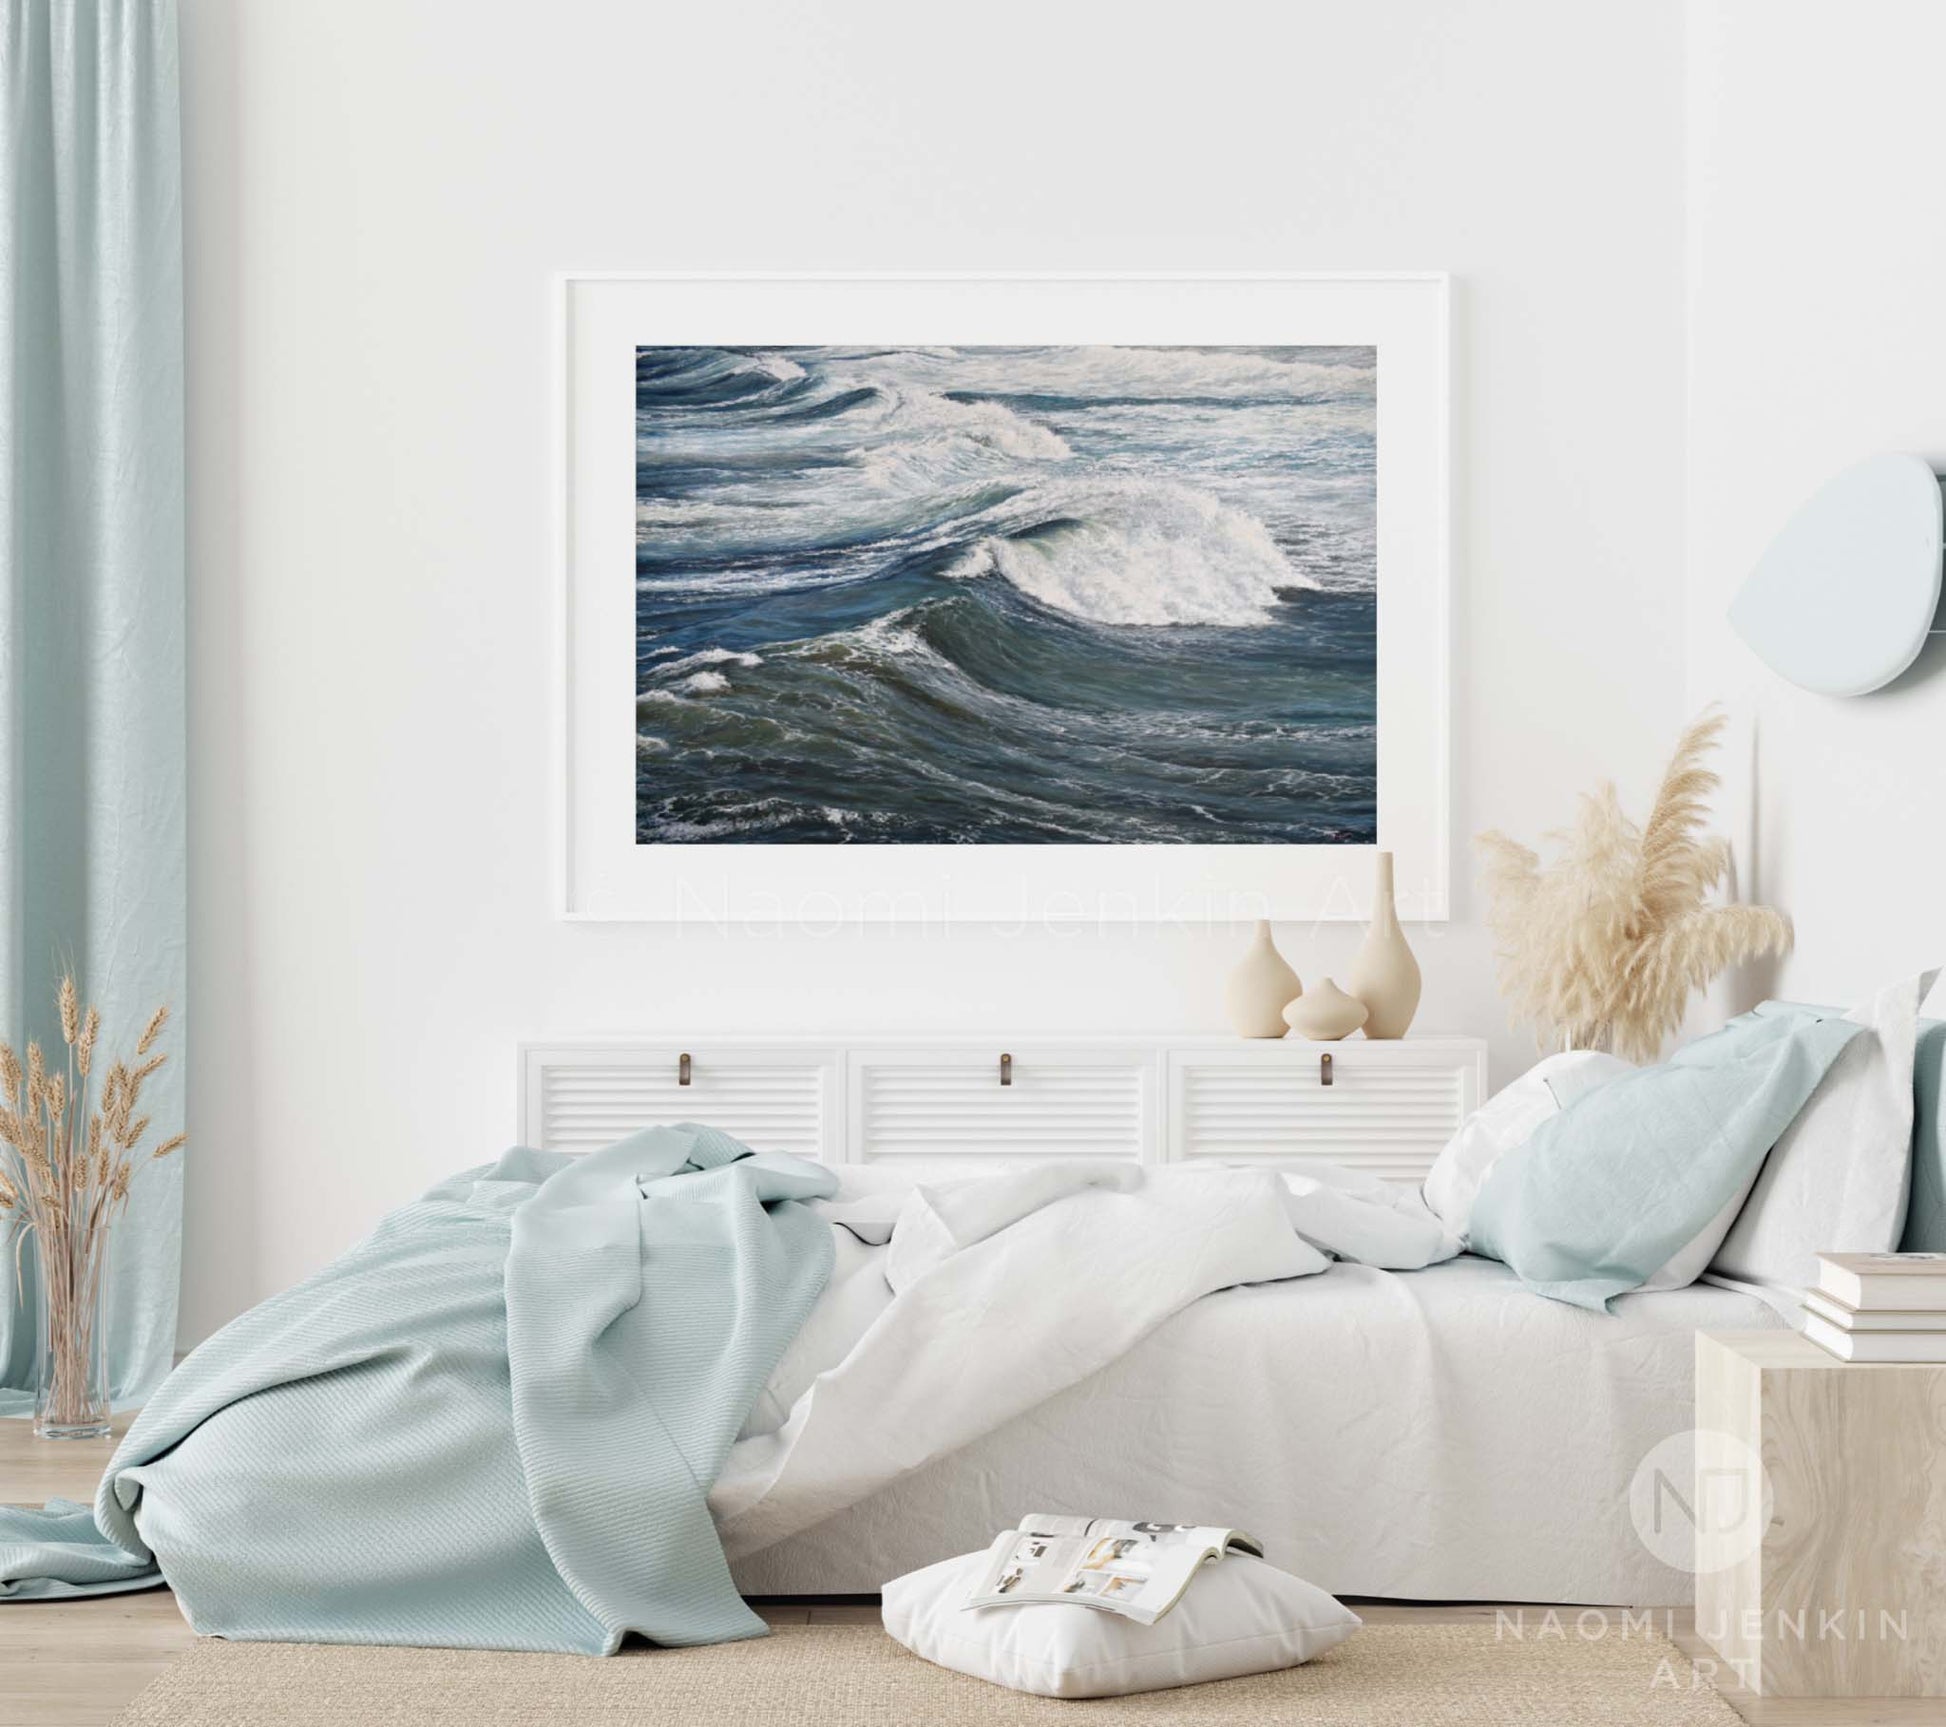 Framed wave print 'Wind Swept Rollers' by seascape artist Naomi Jenkin in a bedroom setting